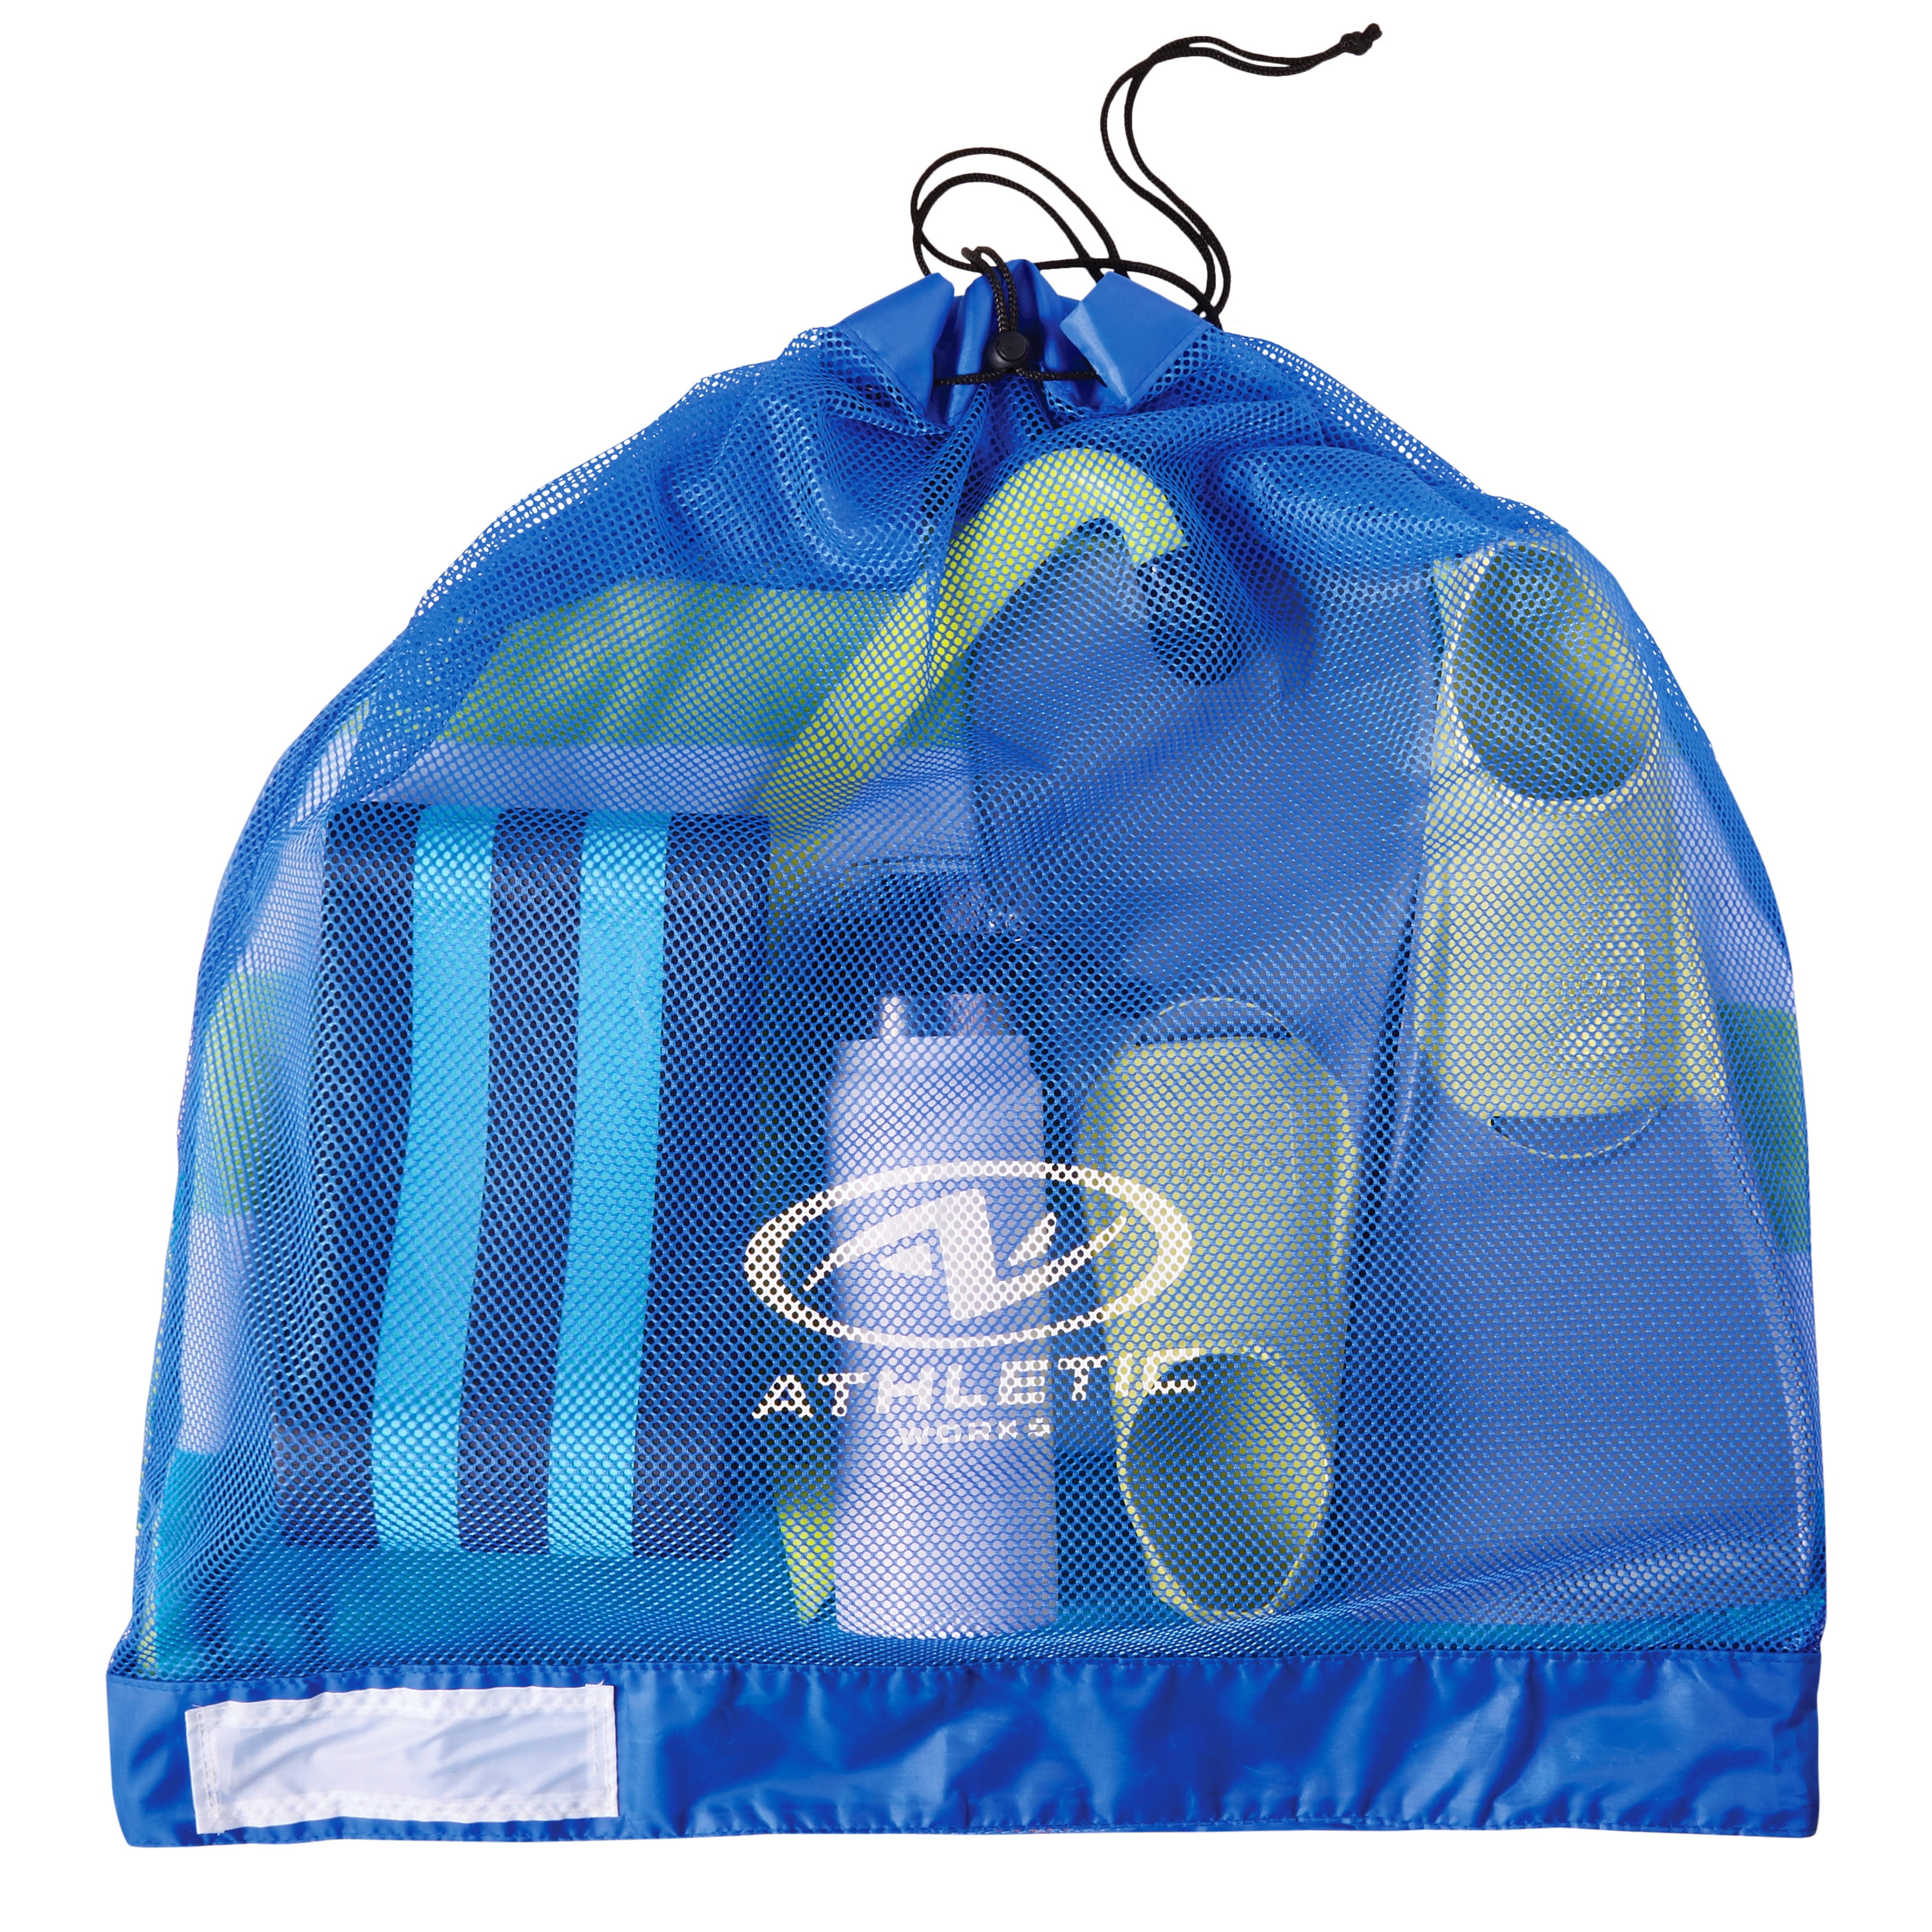 Swim/Equipment Bag Drawstring 